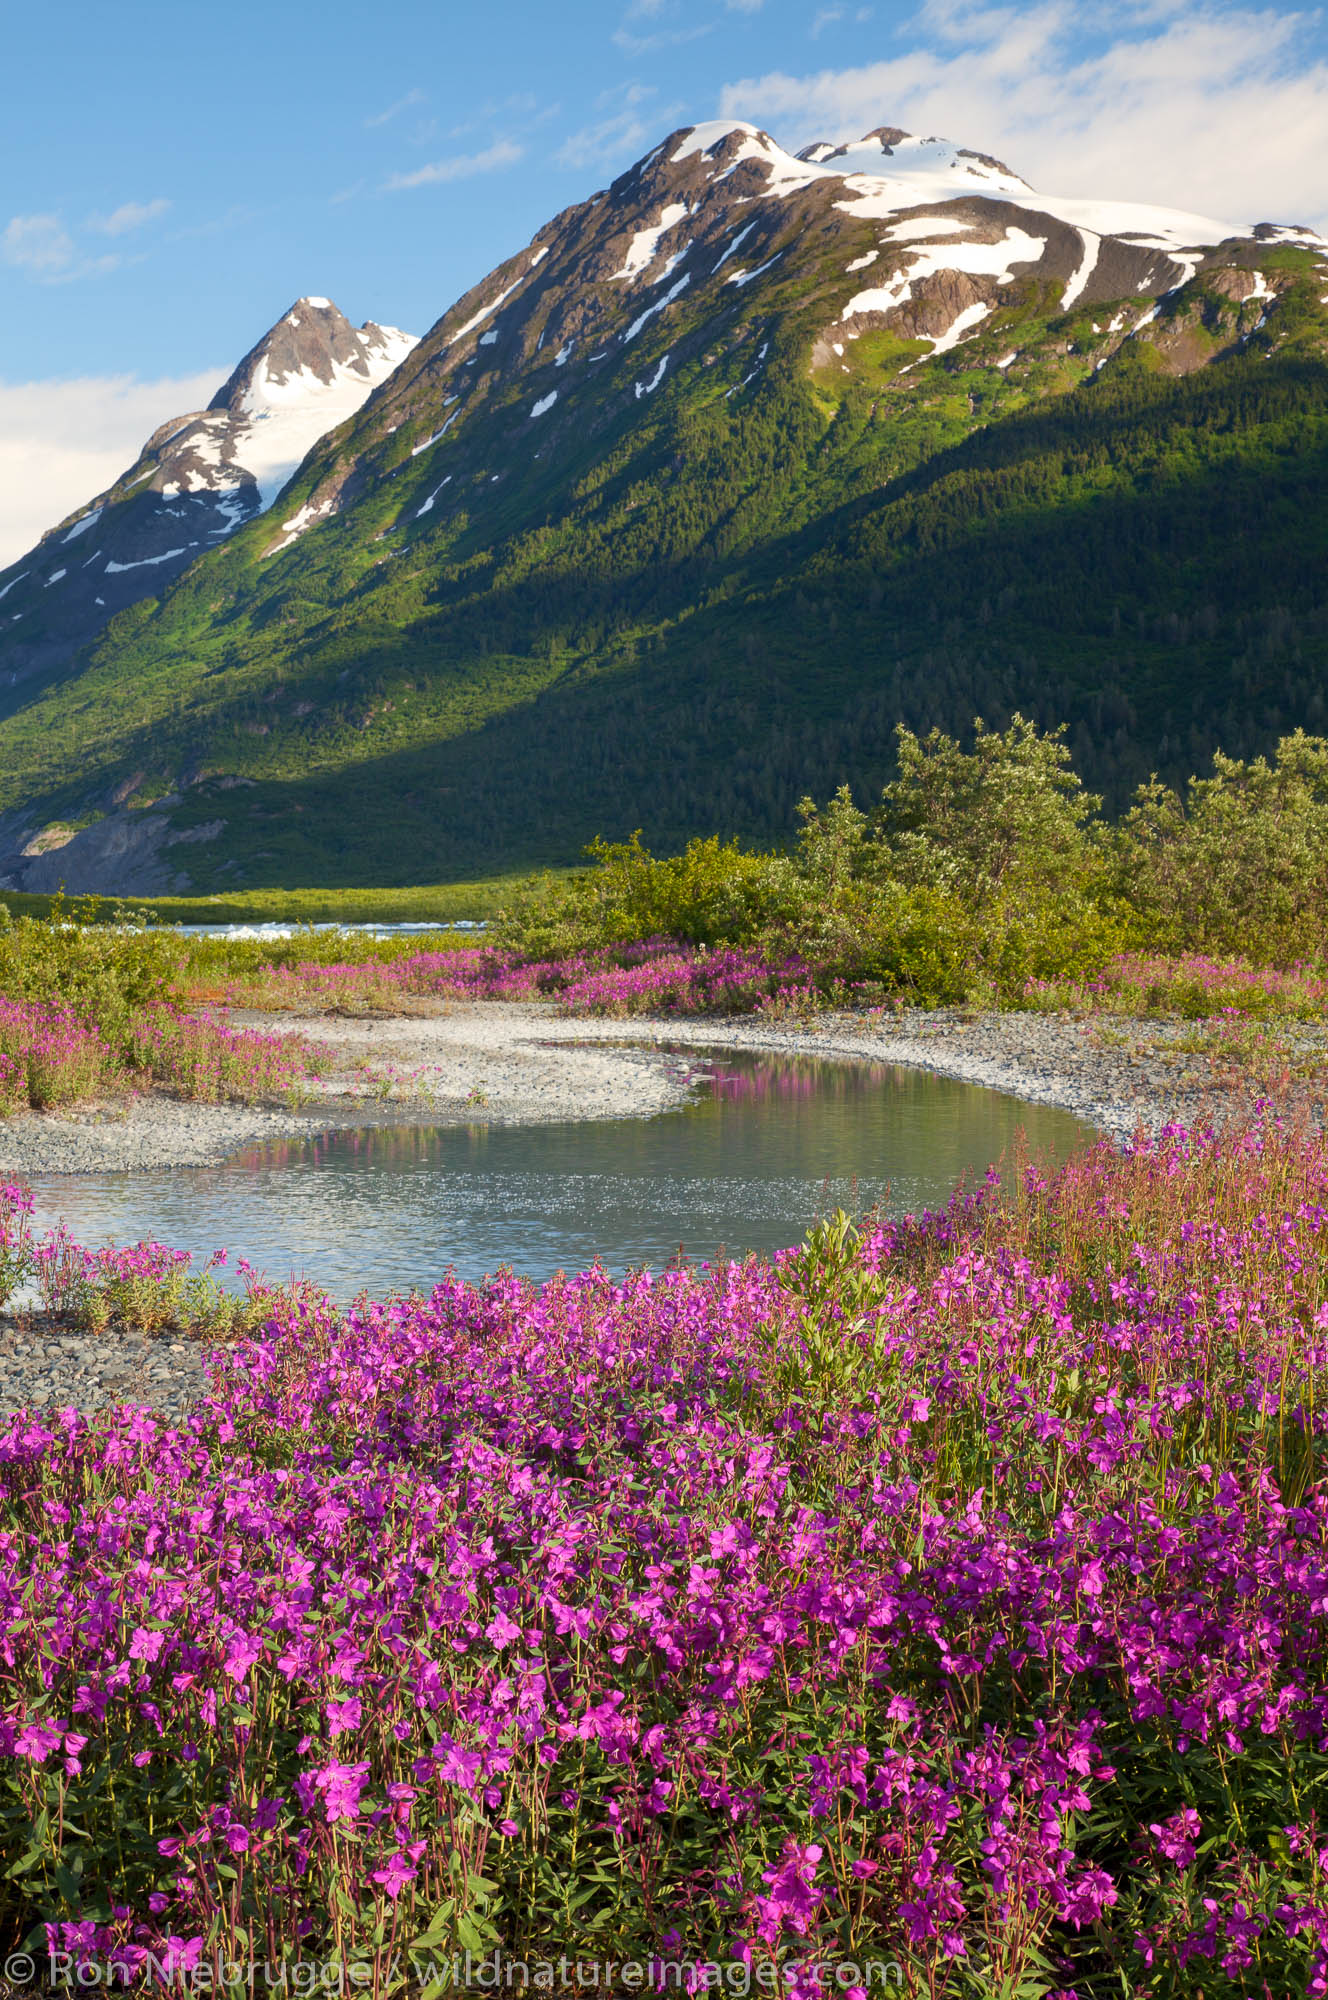 Wildflowers at Spencer Glacier, Chugach National Forest, Alaska.